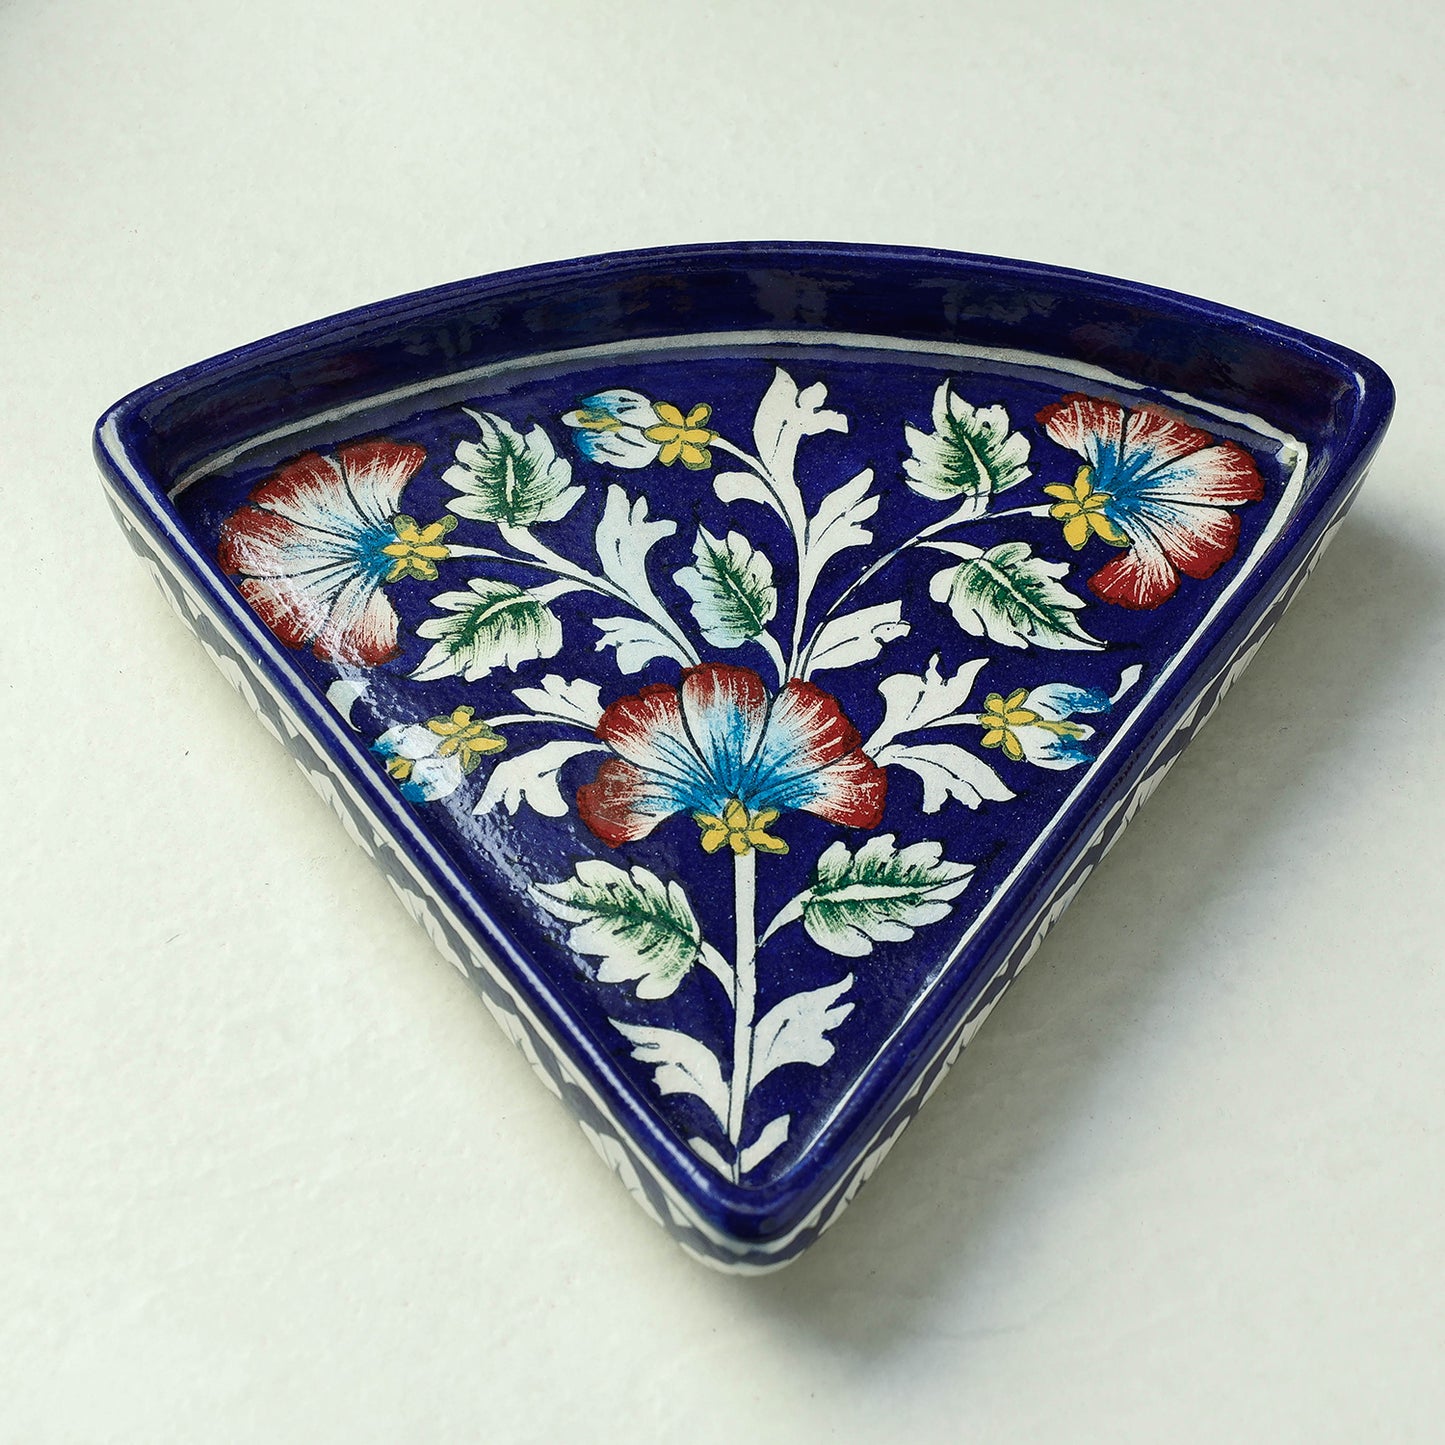 Original Blue Pottery Ceramic Triangular Tray (8 x 9 in)